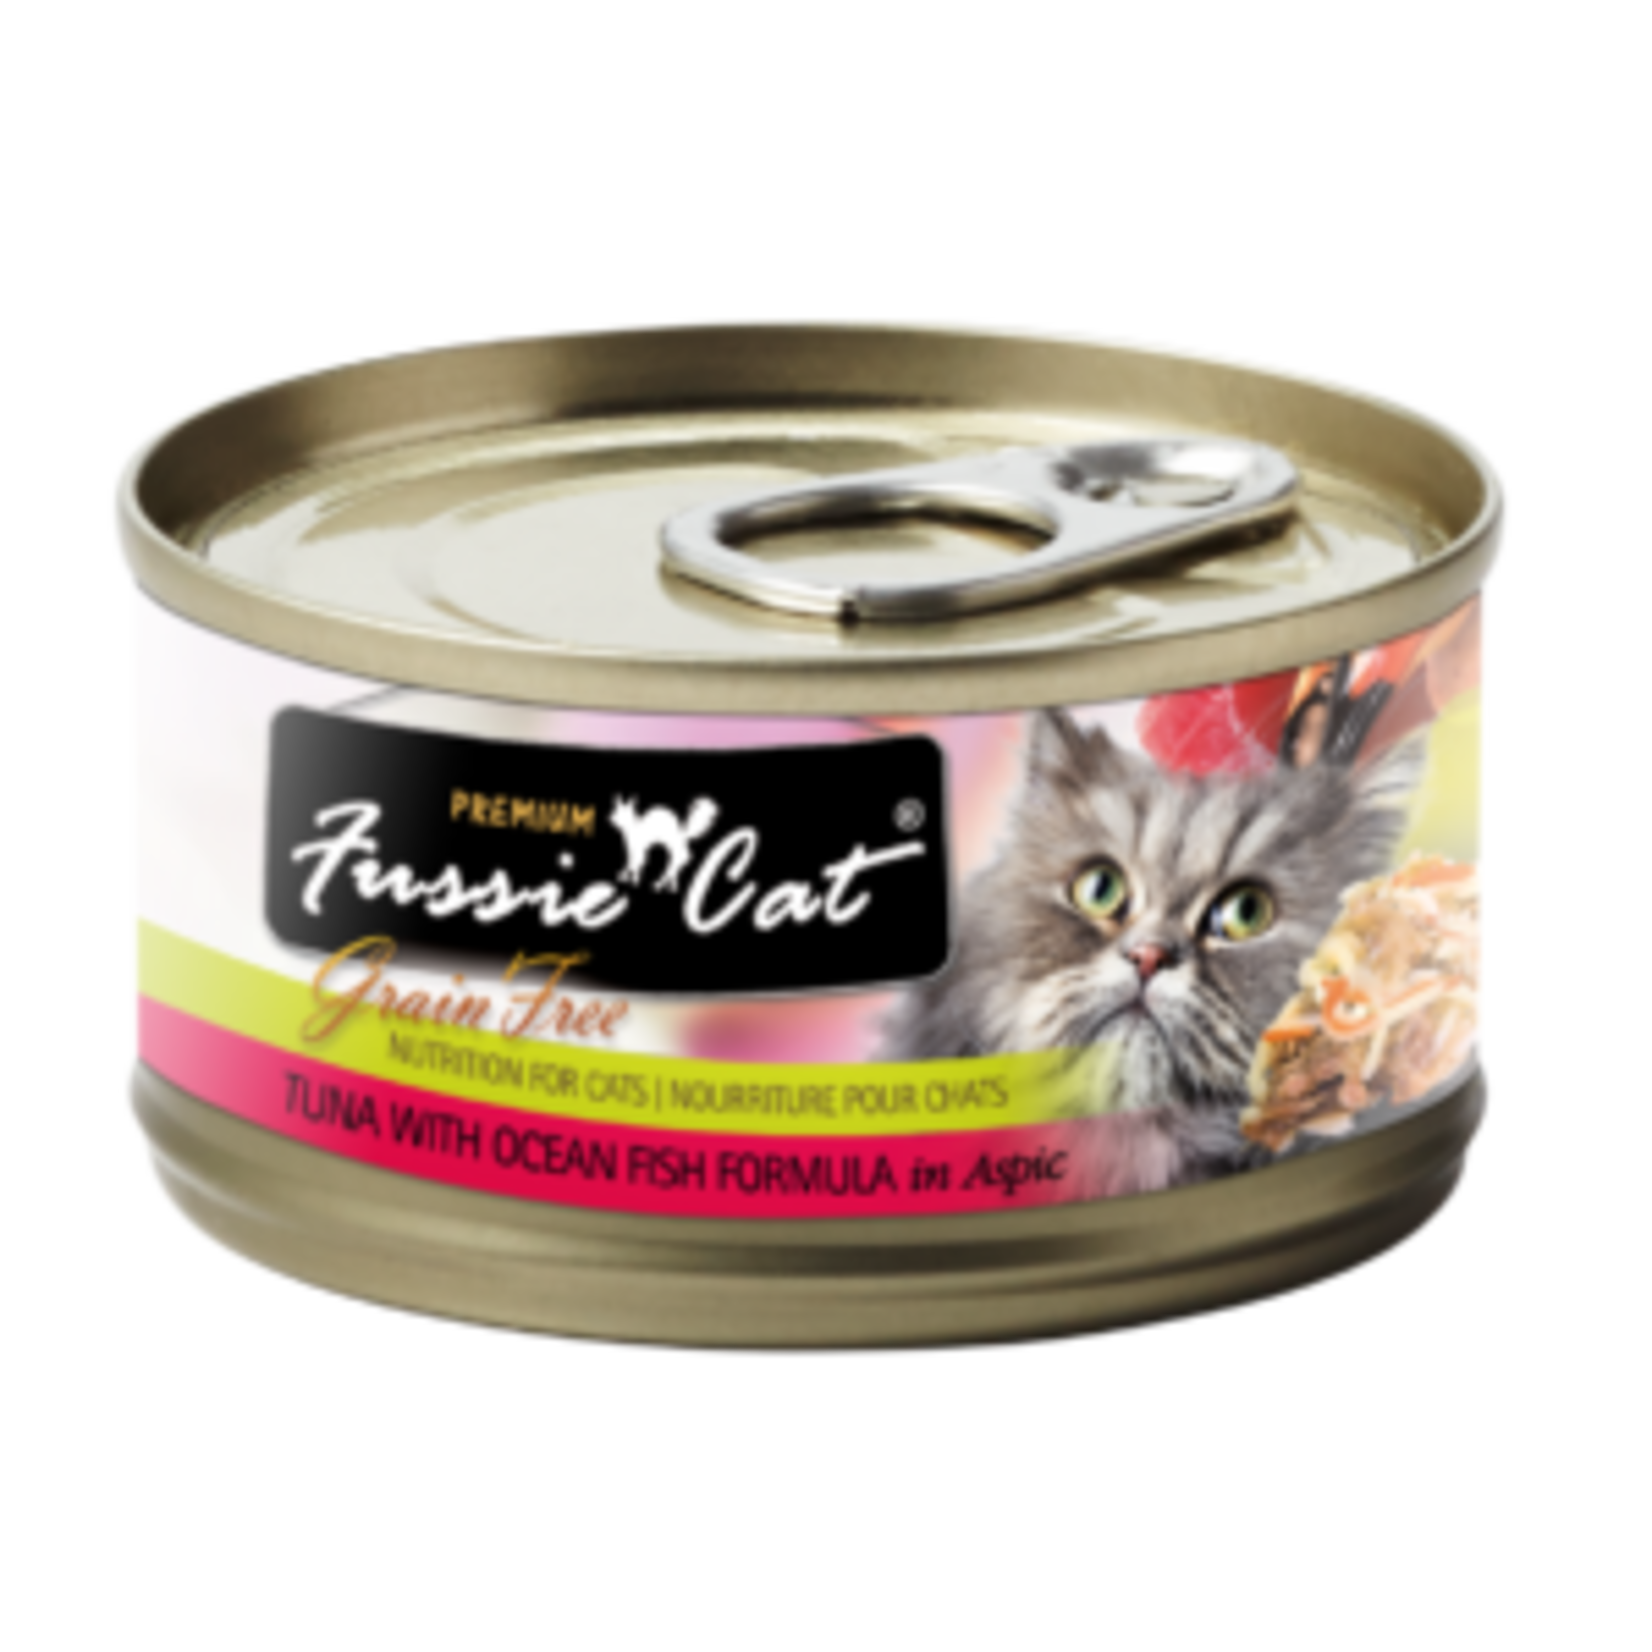 Fussie Cat Fussie Cat Wet Cat Food Tuna with Ocean Fish Formula in Aspic 2.8oz Can Grain Free